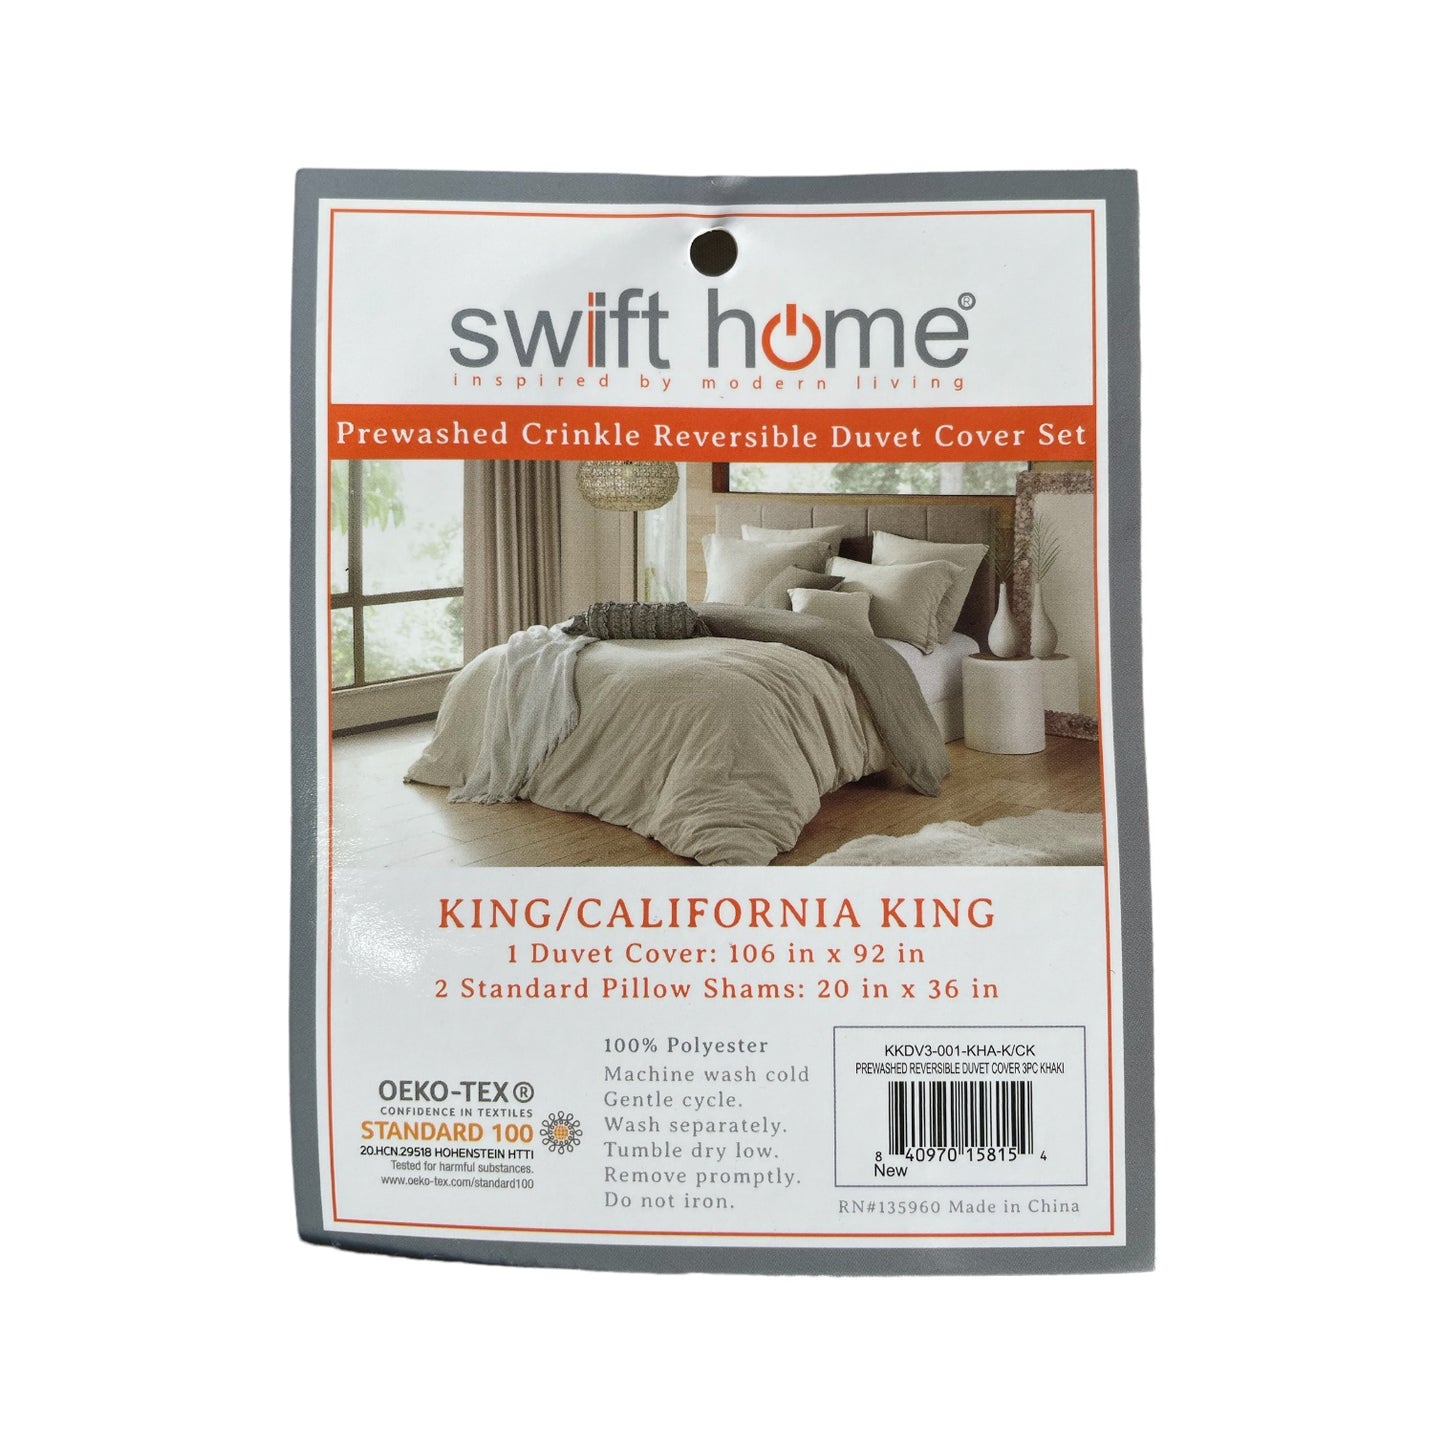 Swift Home Prewashed Crinkle Reversible Duvet Cover, King/Cali King, Khaki